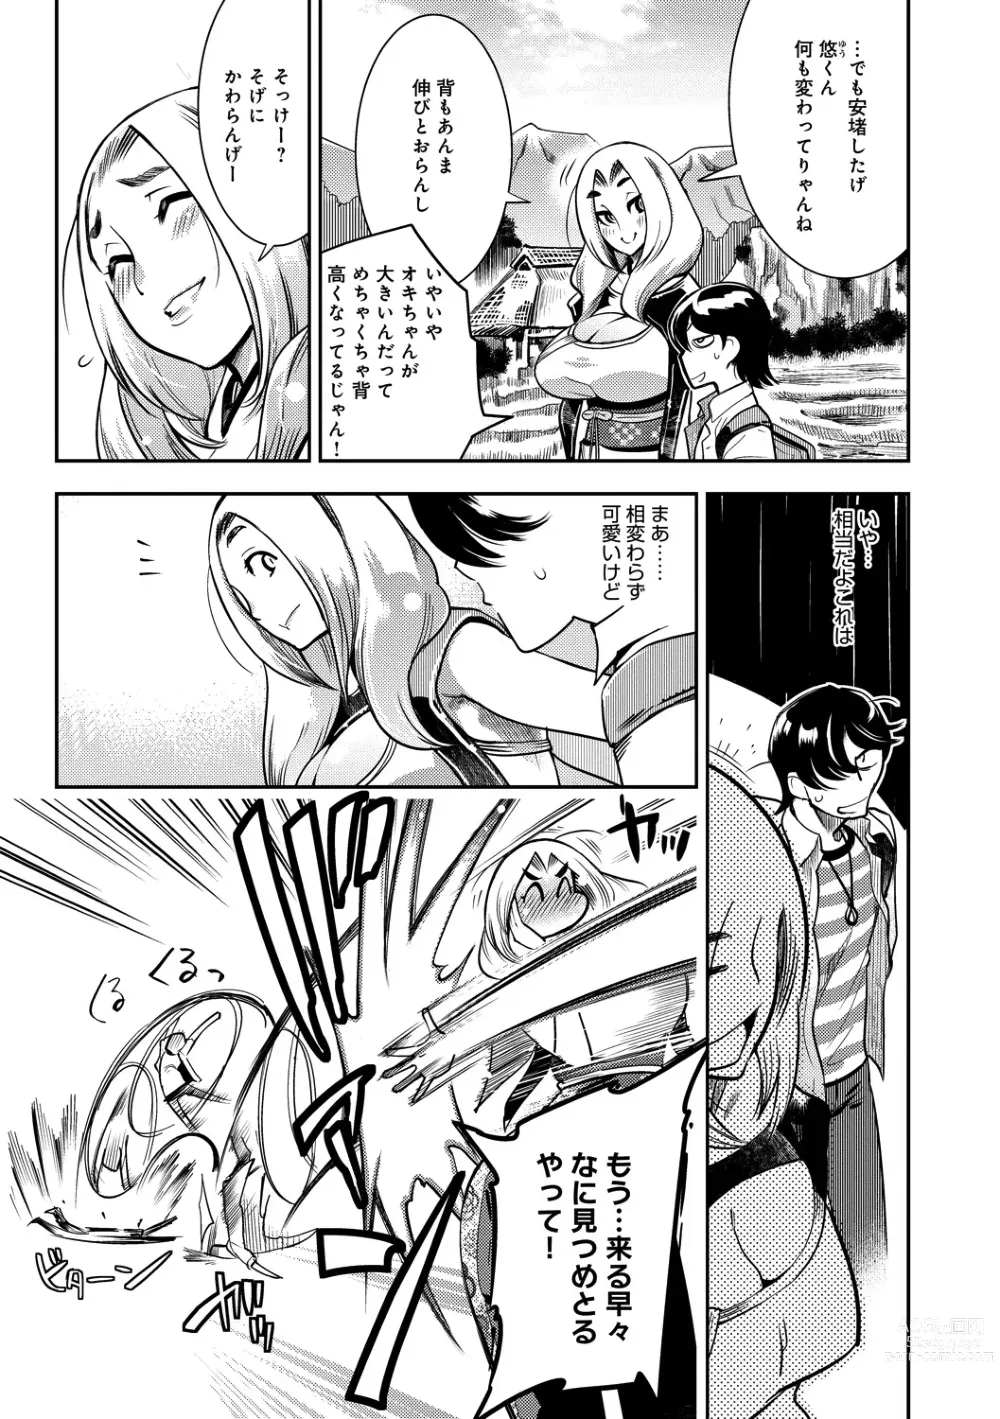 Page 9 of manga Hamekko 3Peace!!!